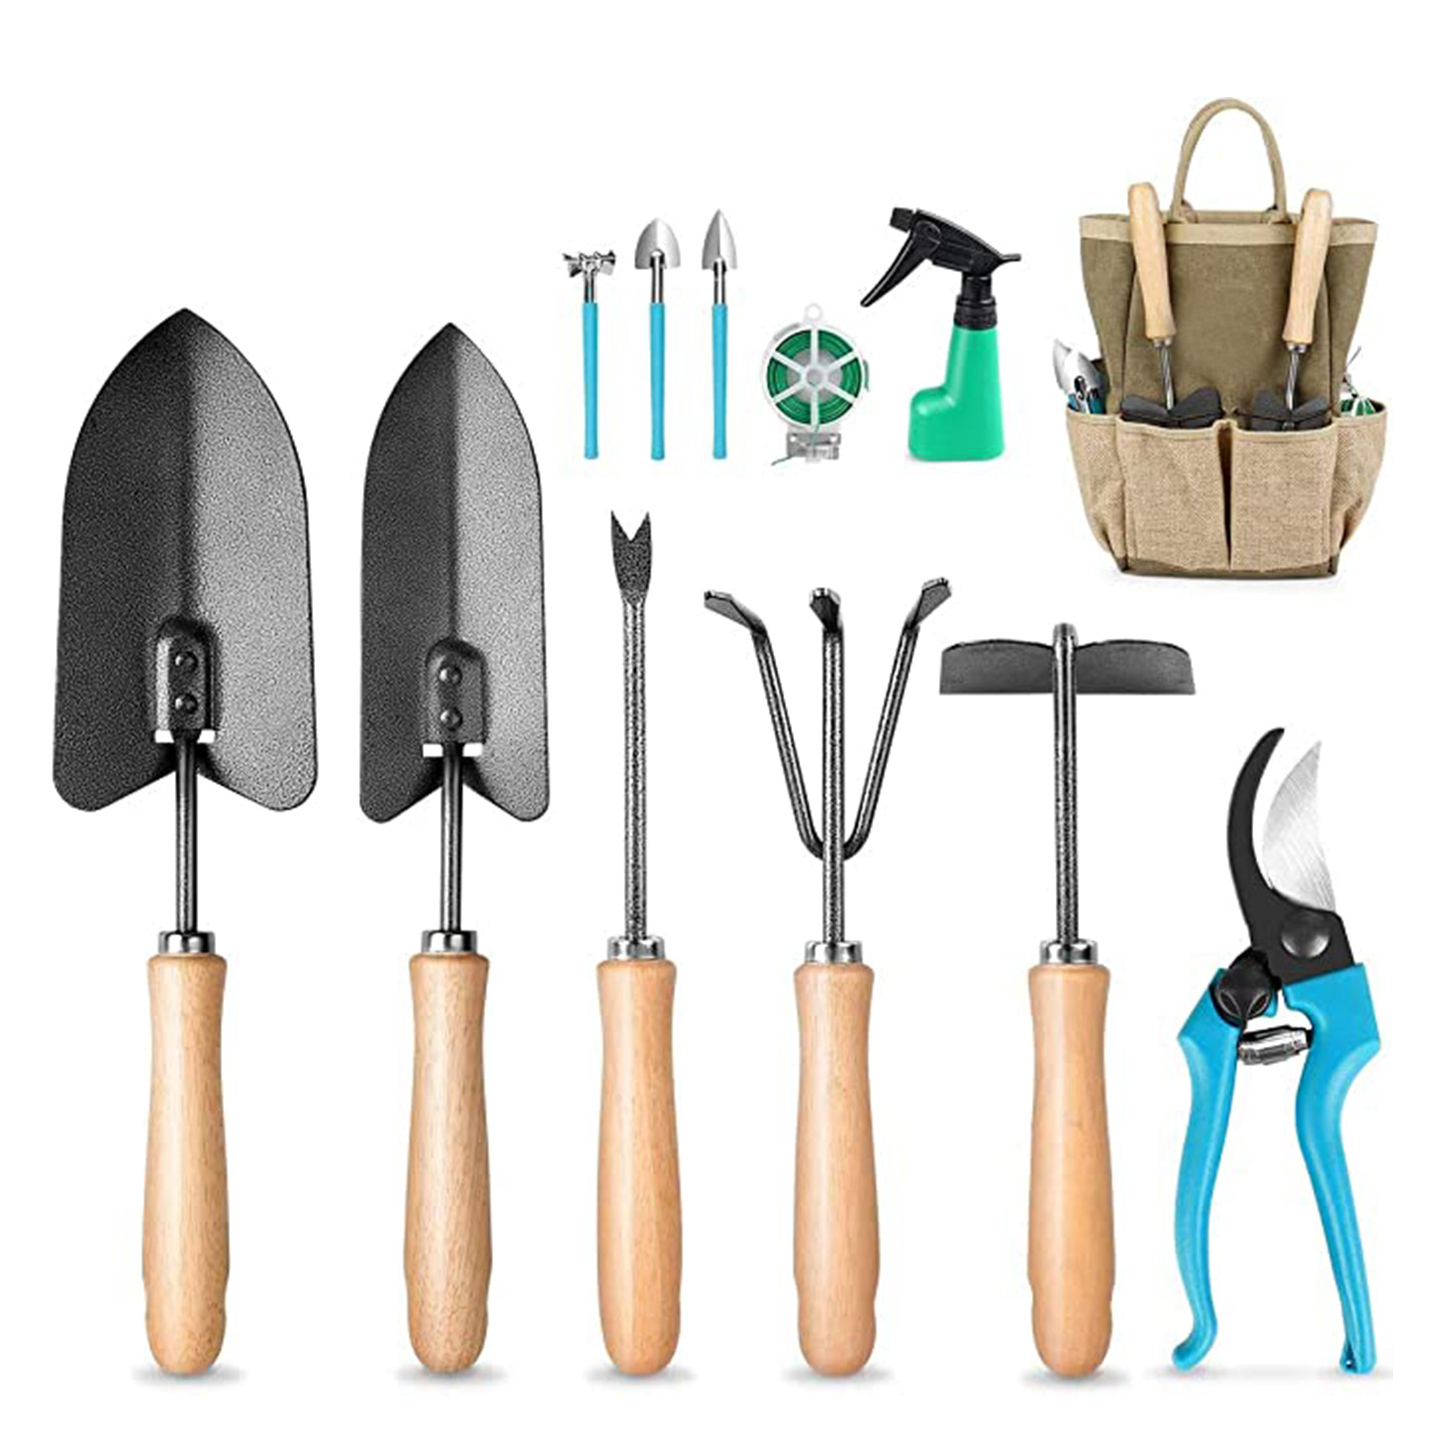 OEM/ODM Factory Gardening Tool Bag Set - 12PCS Garden Tools with Cloth Bag – MACHINERY TOOLS